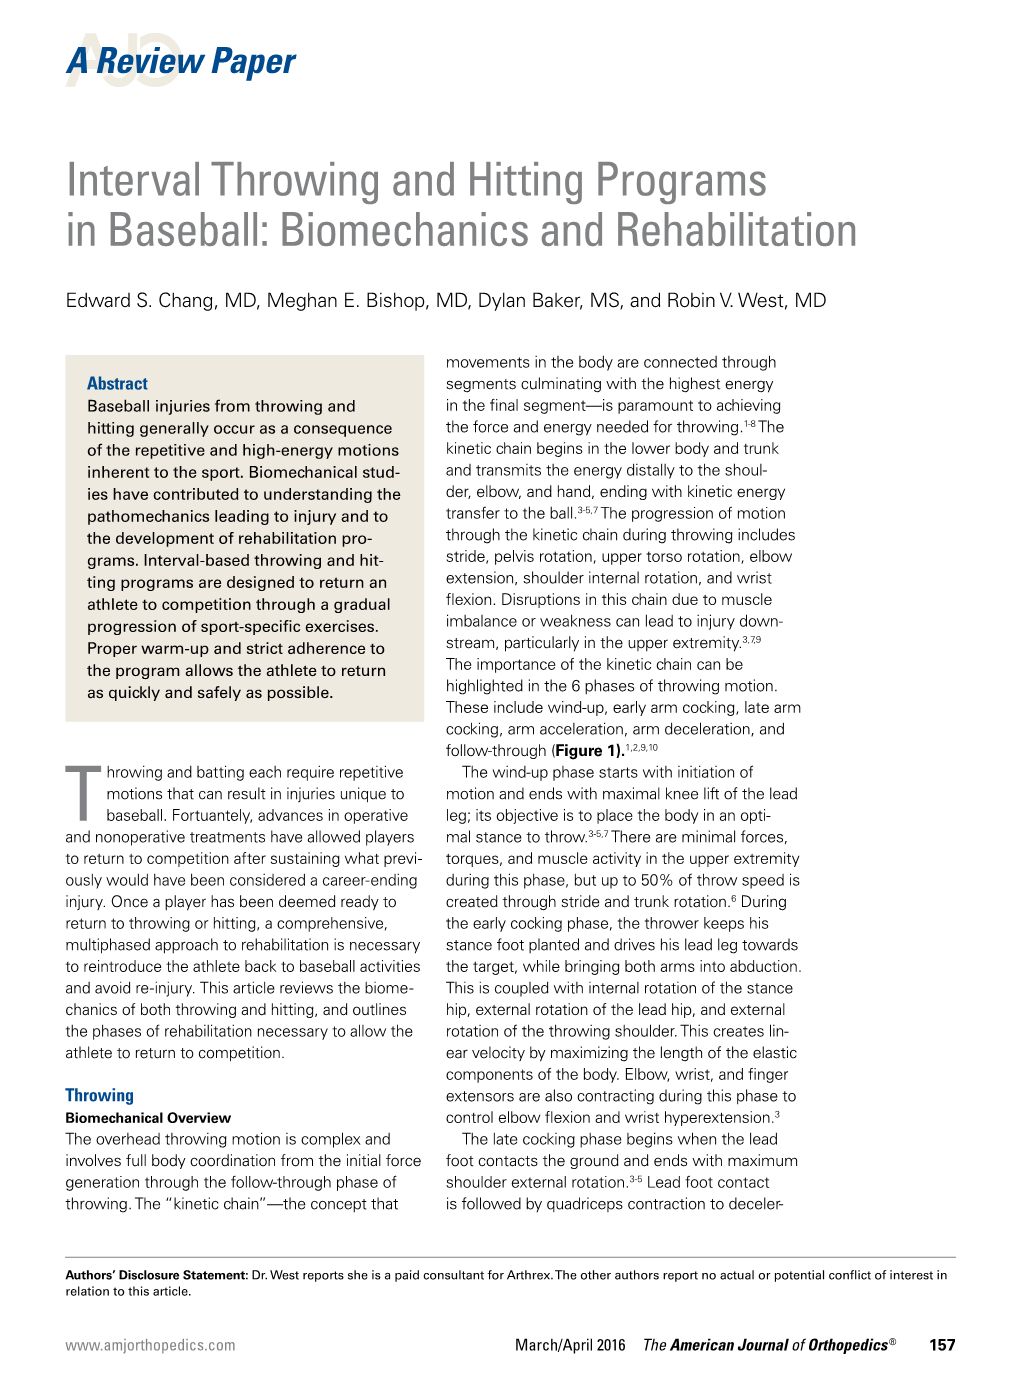 Interval Throwing and Hitting Programs in Baseball: Biomechanics and Rehabilitation